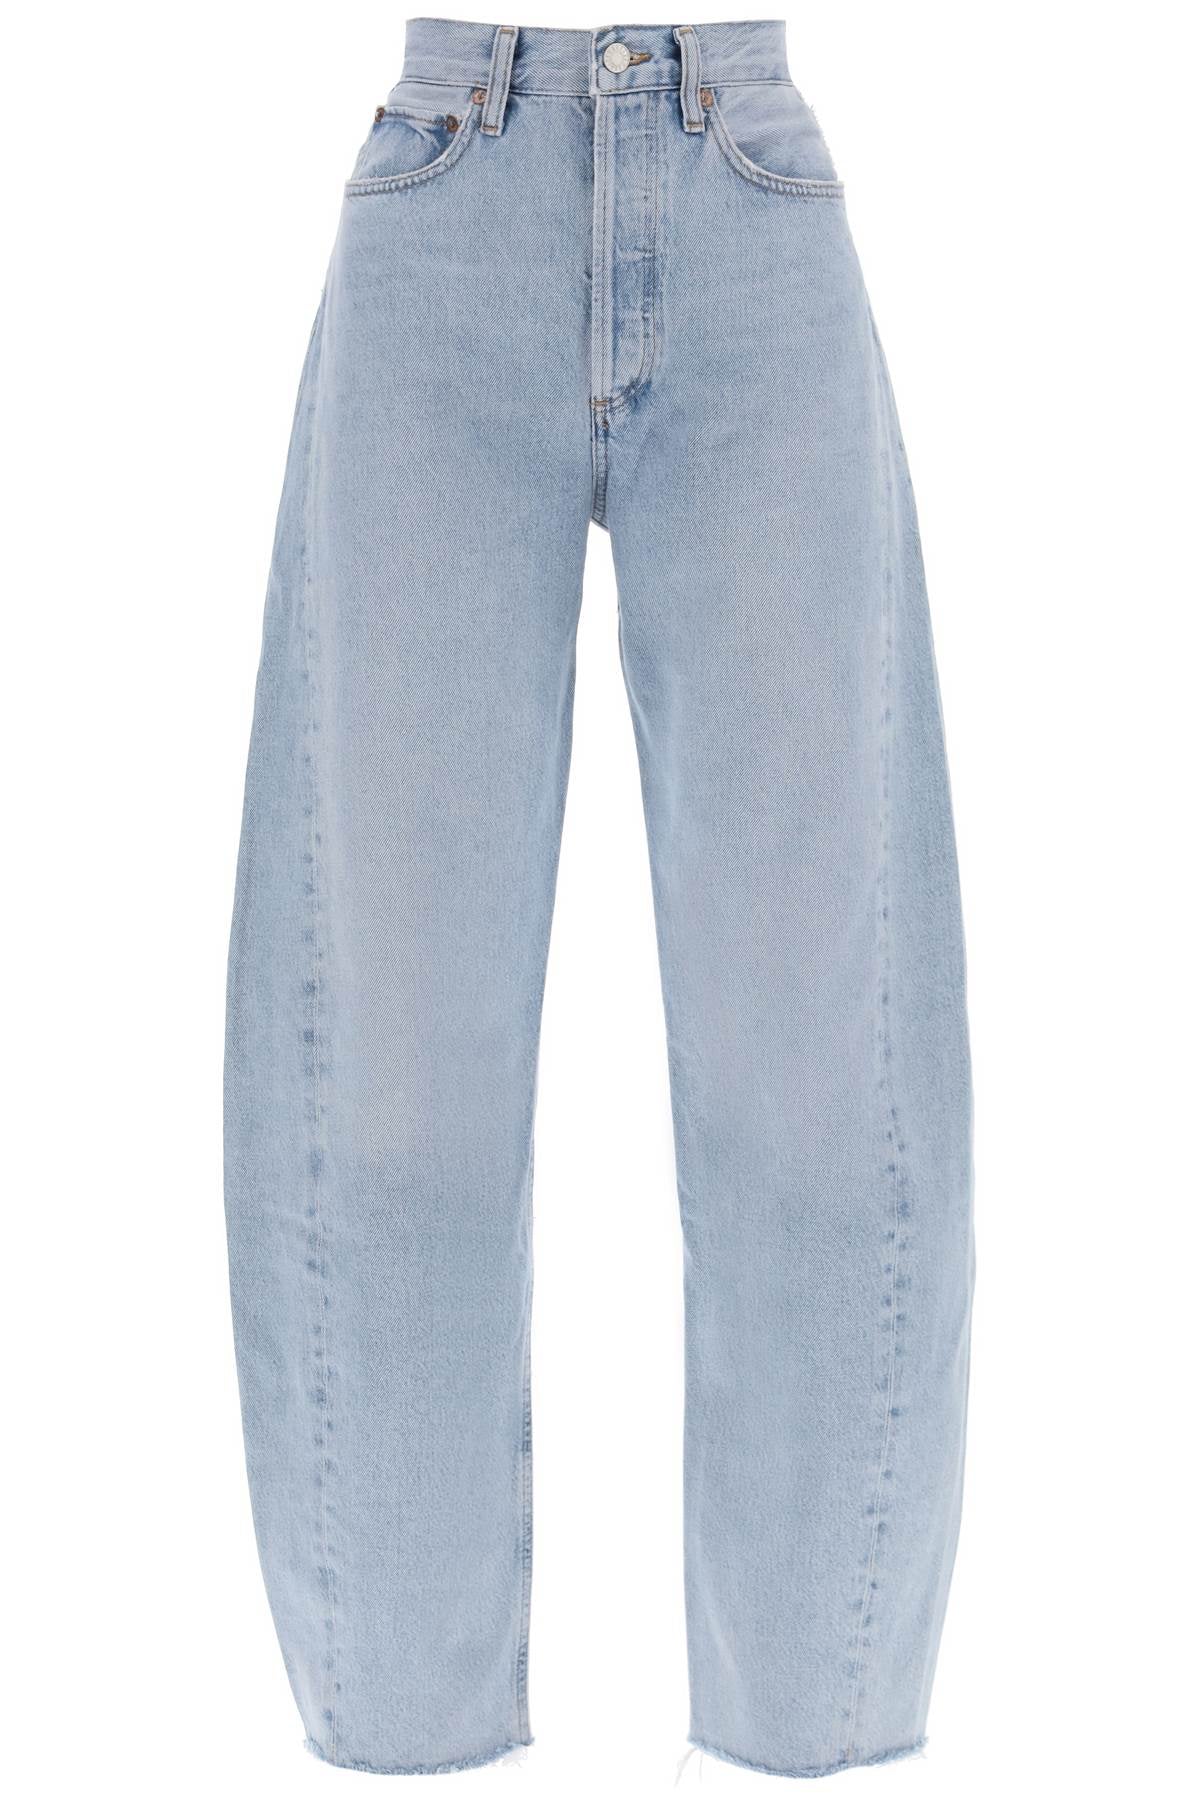 Agolde luna curved leg jeans-0